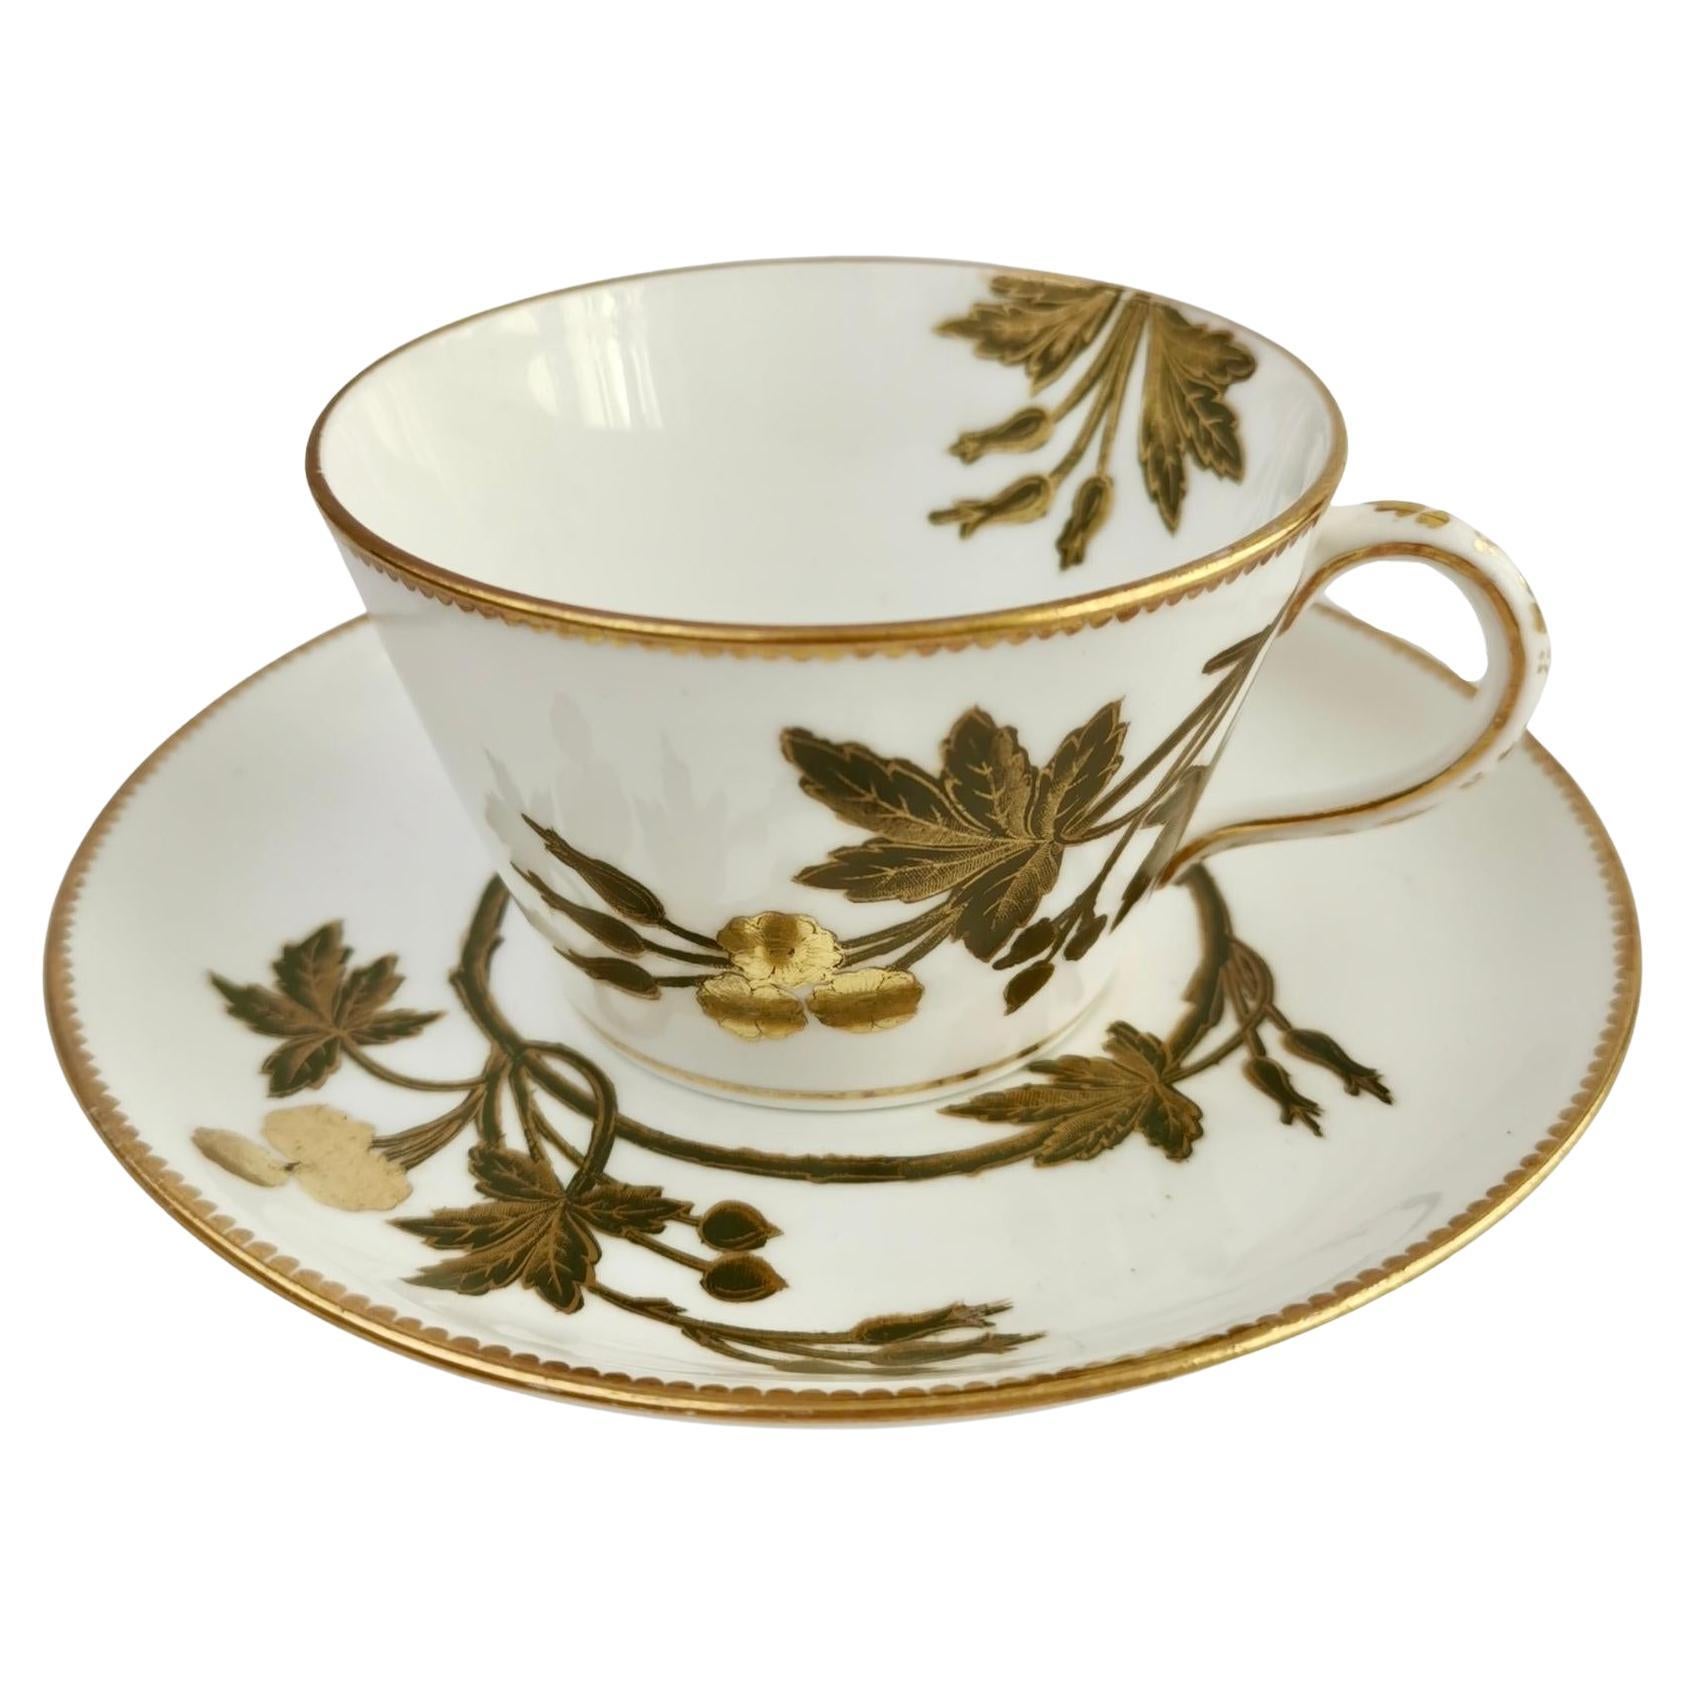 English Porcelain Teacup, Aesthetic Movement Bronze-Gilt Sprigs, ca 1875